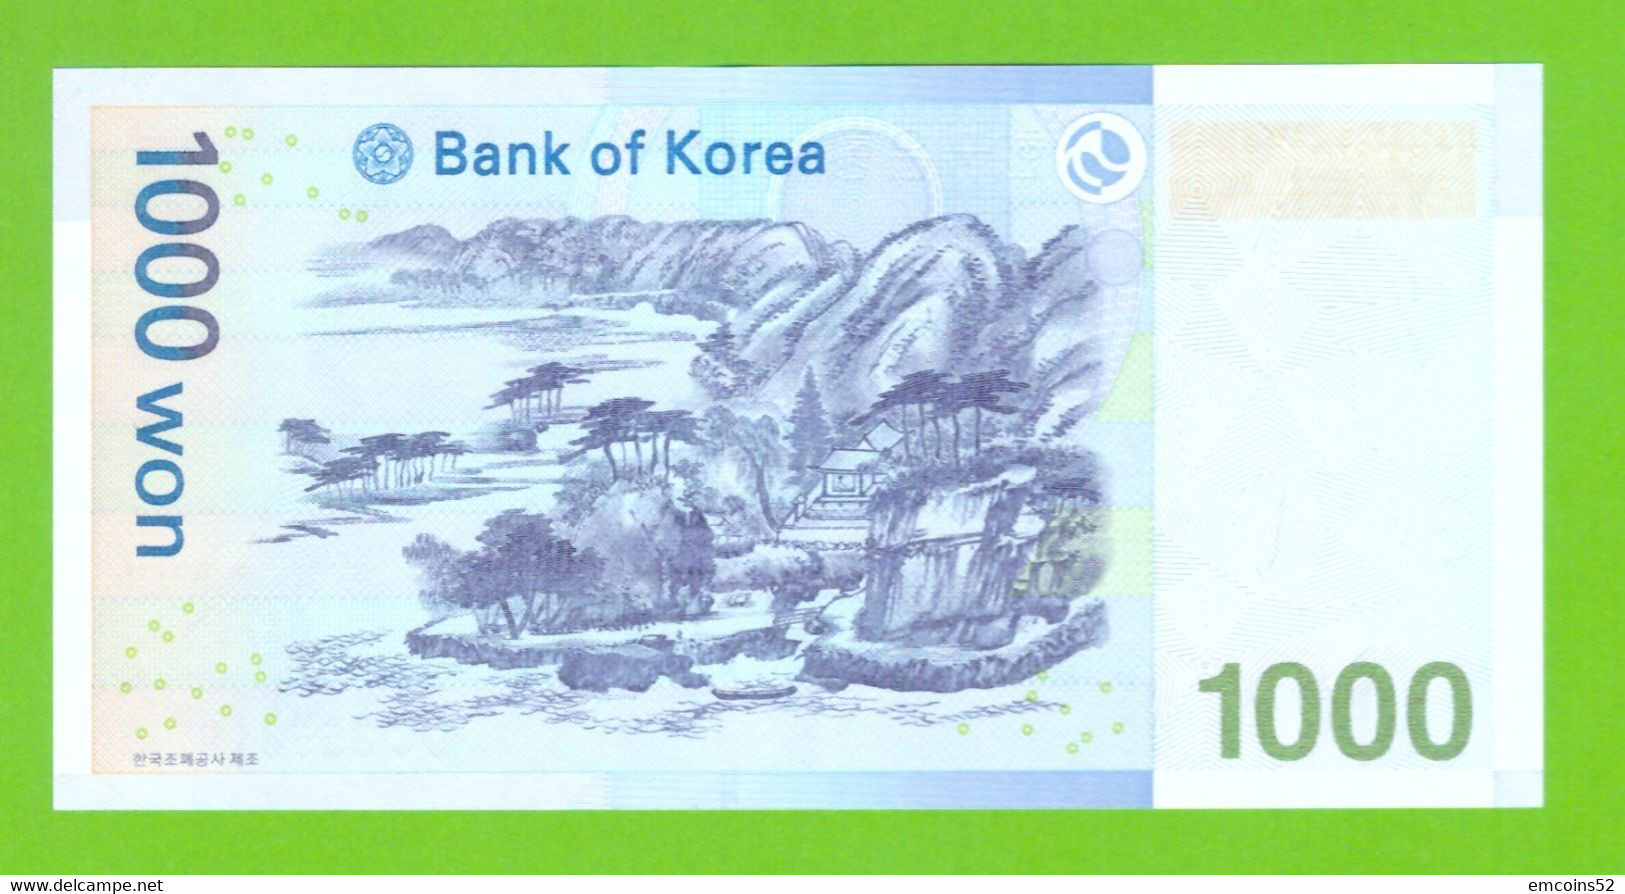 KOREA SOUTH 1000 WON 2007  P-54 UNC - Korea, Zuid